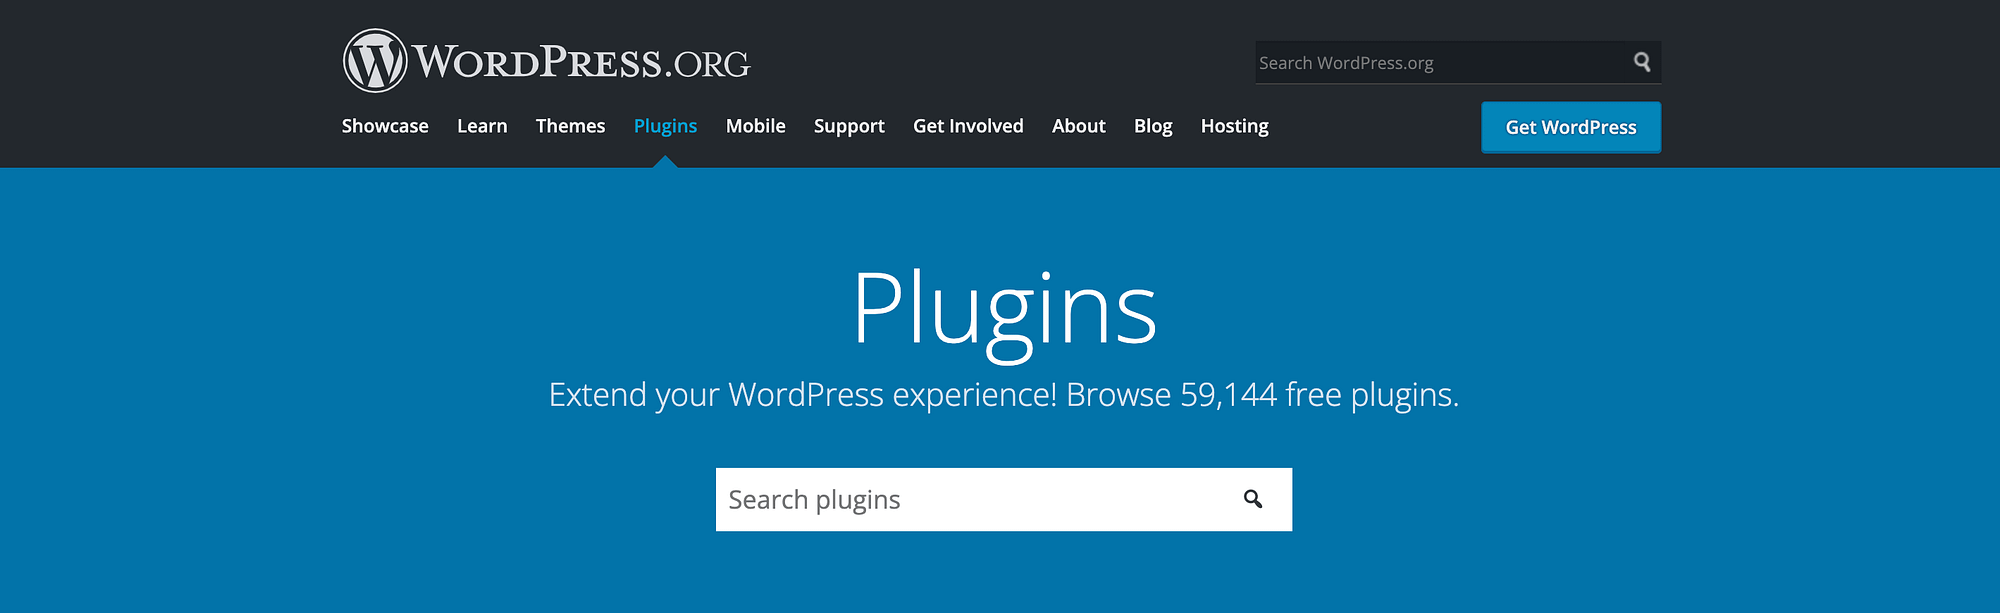 Kho lưu trữ plugin WordPress.